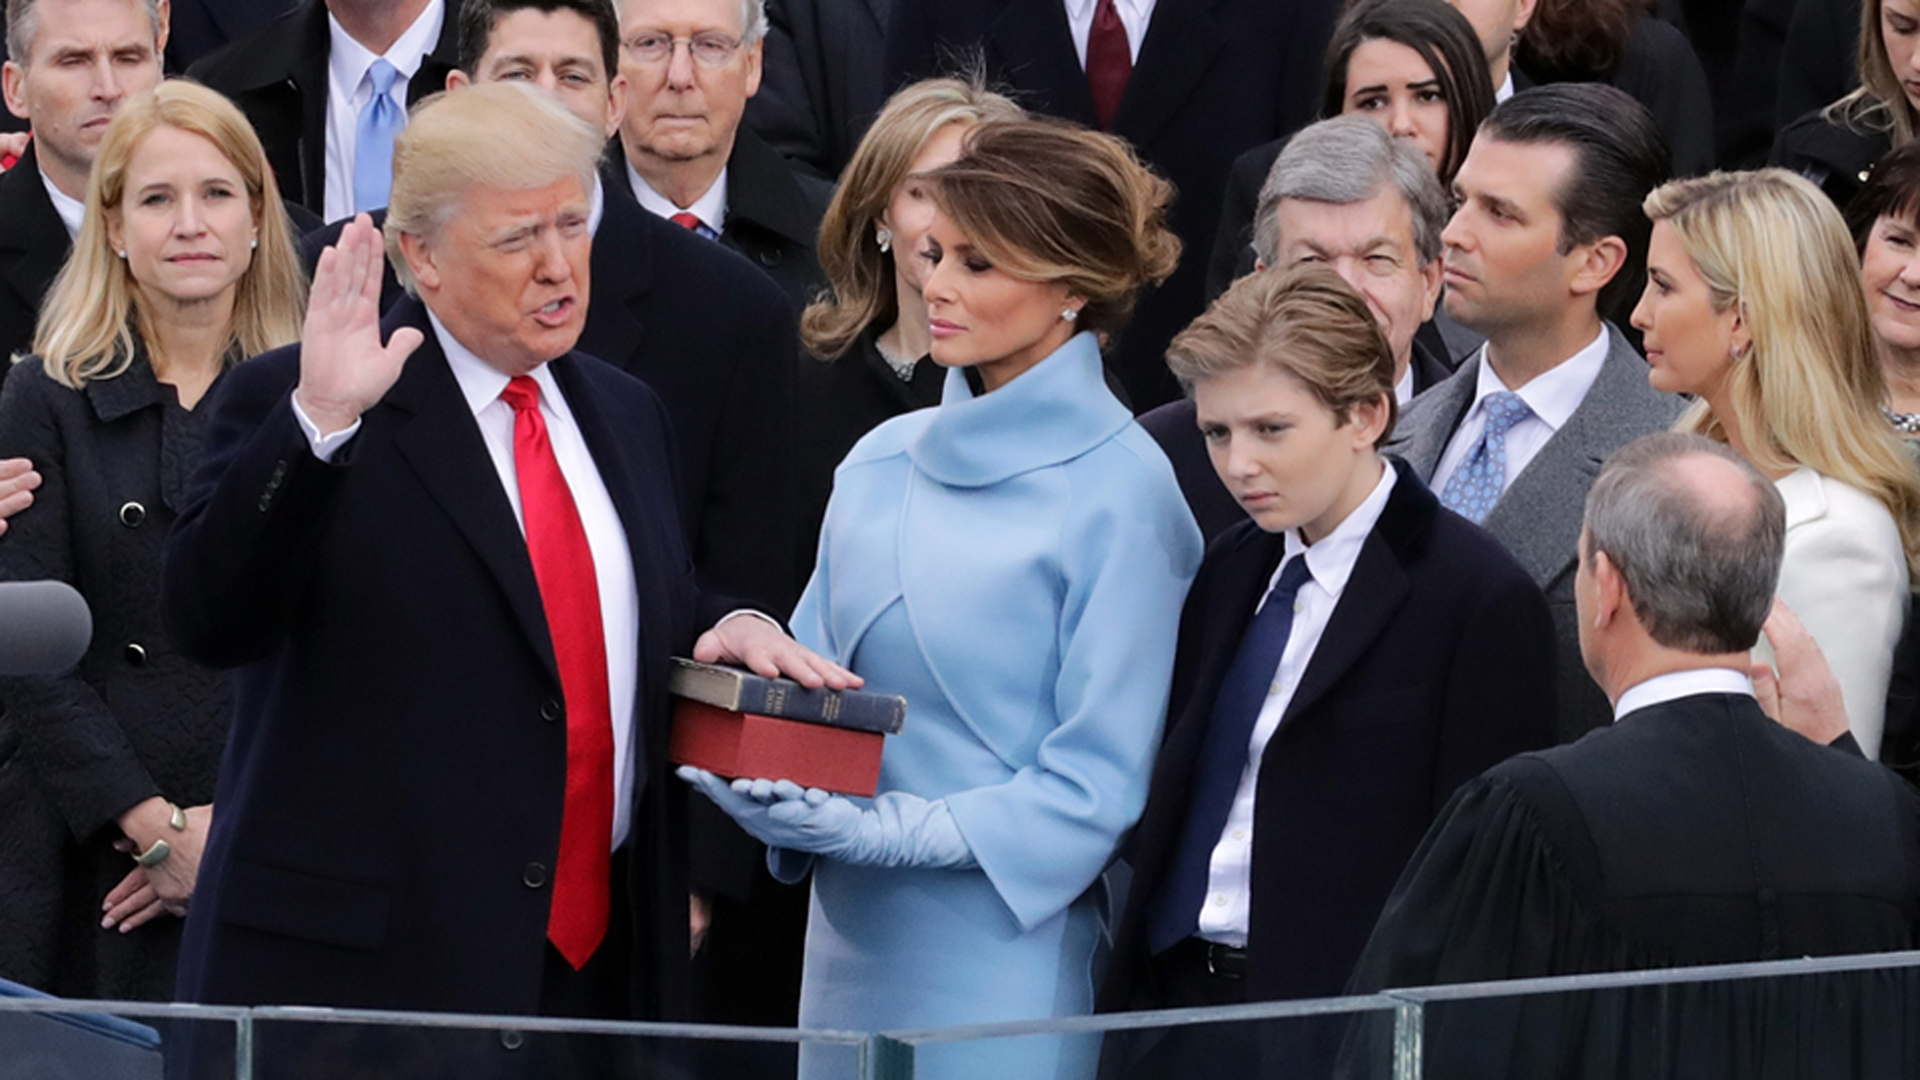 Donald Trump's Inauguration